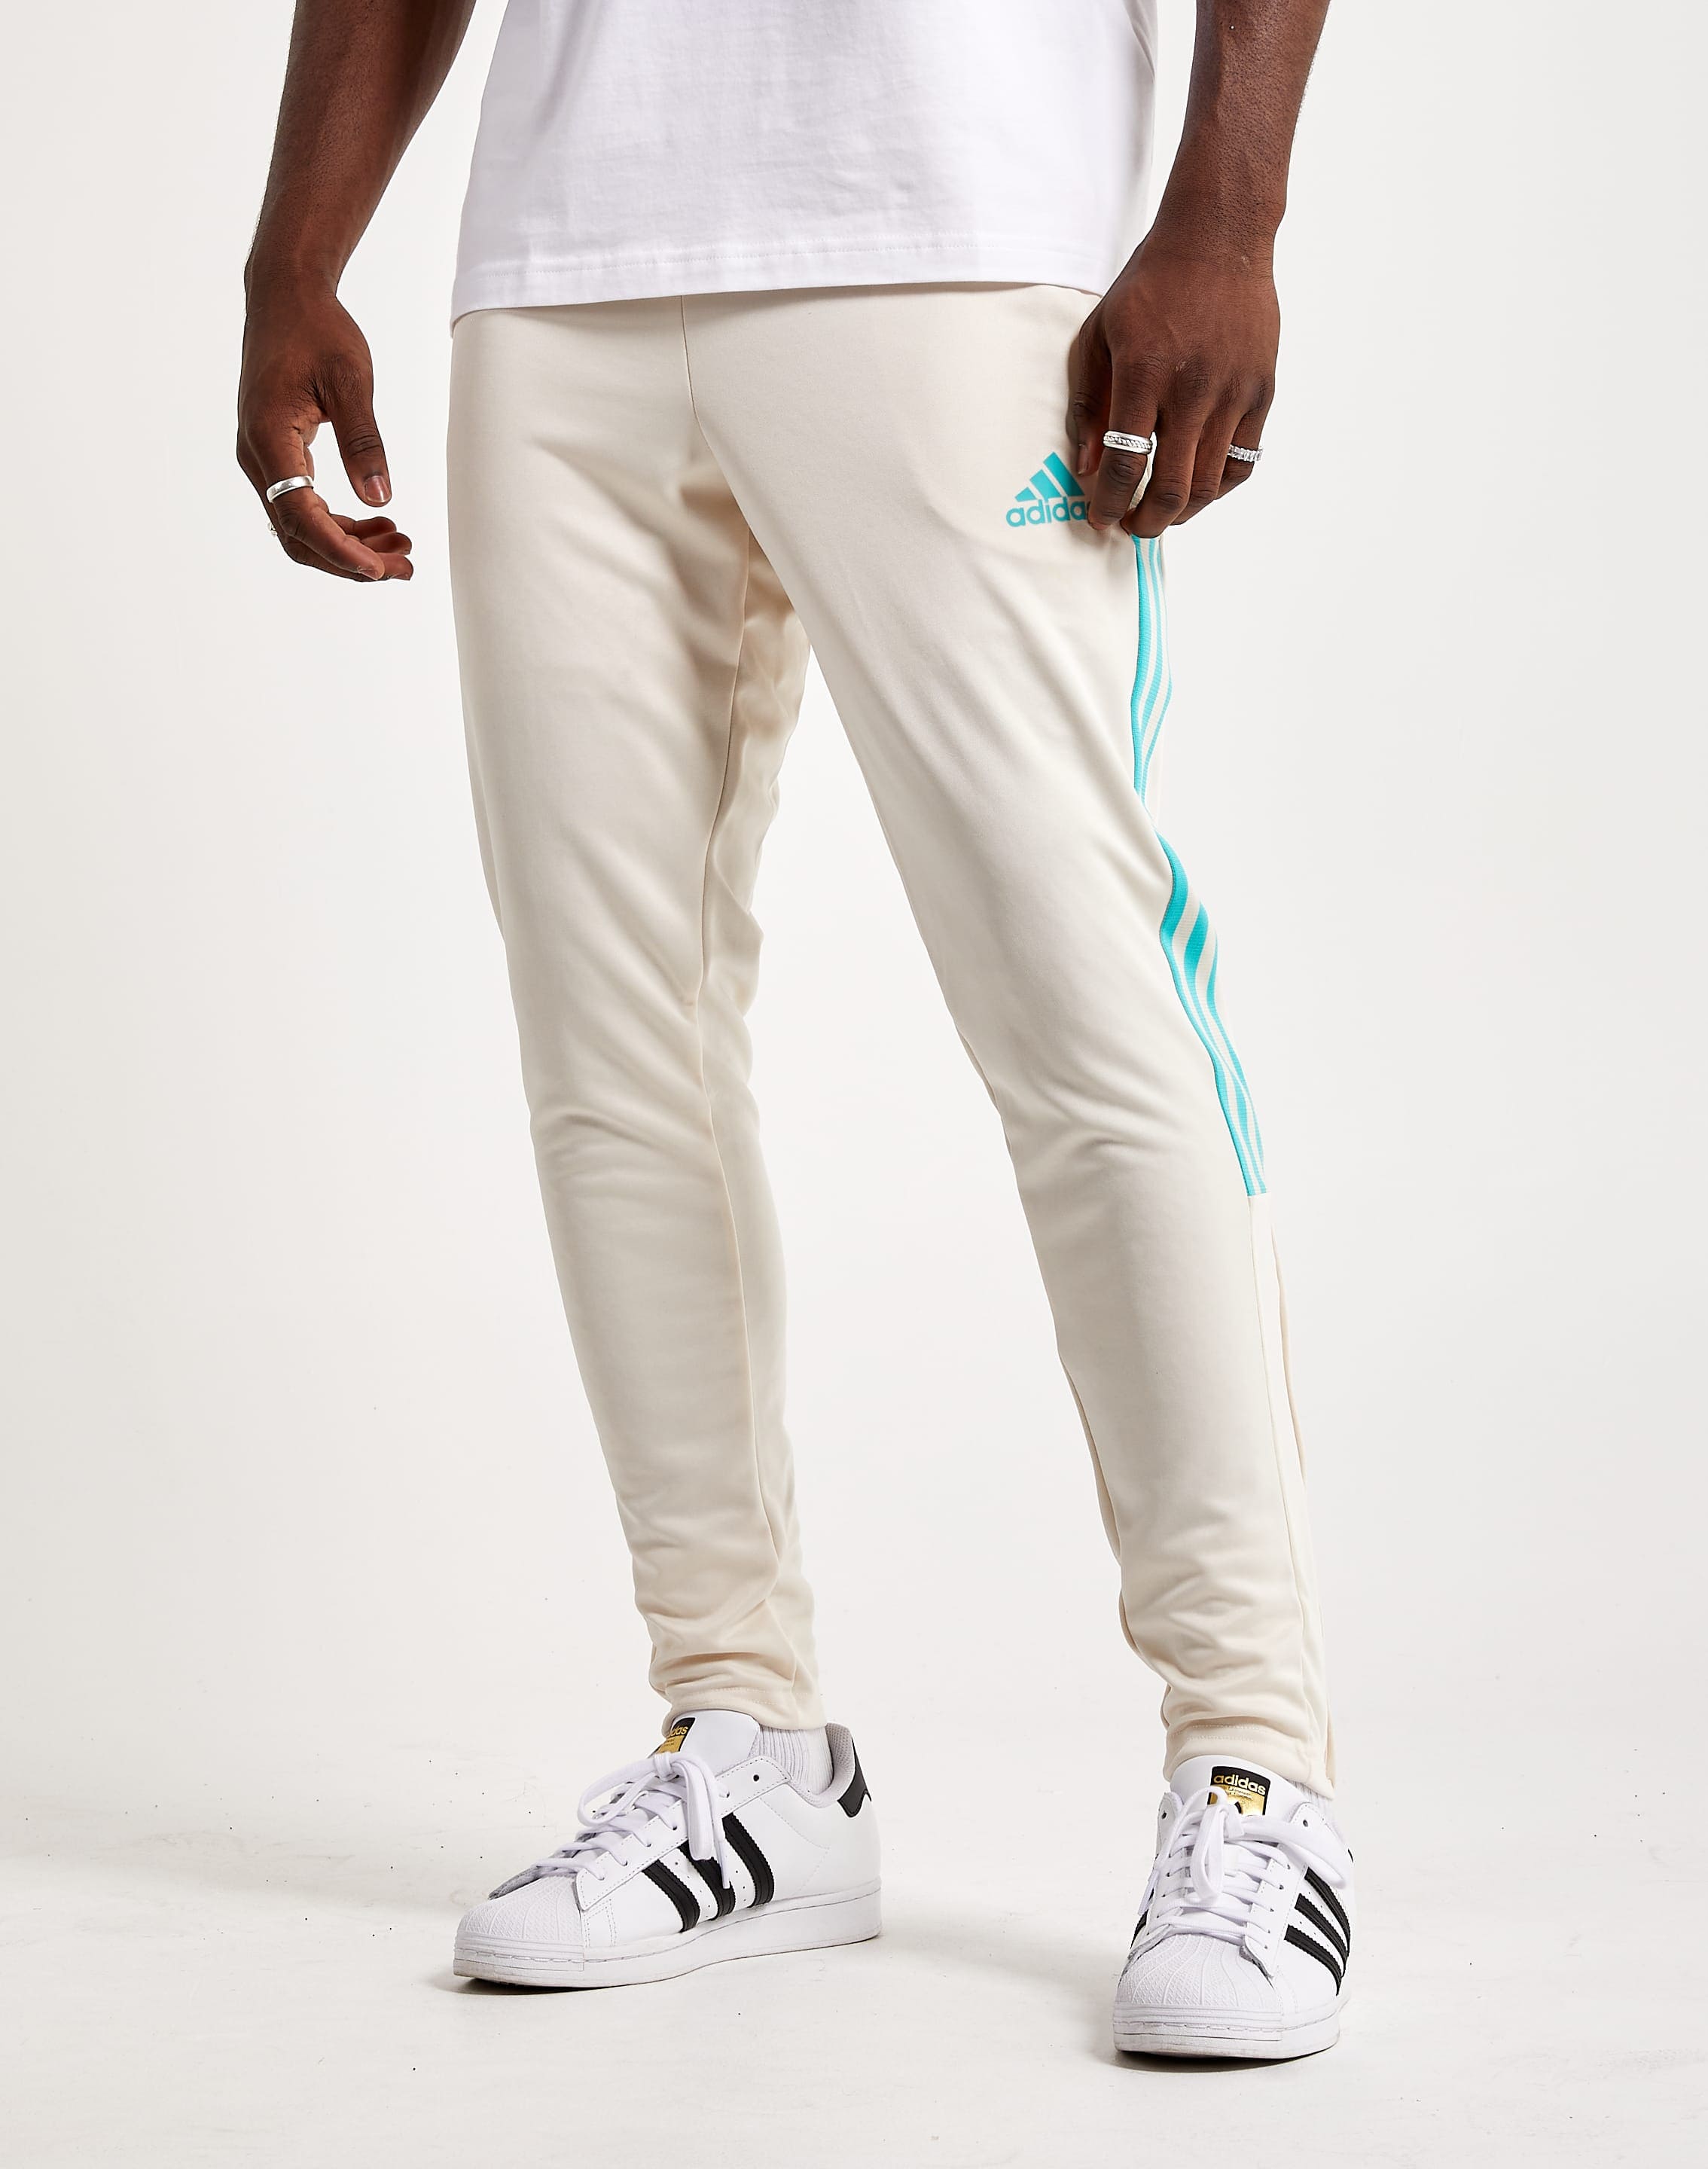 Adidas Originals Men Slim Fit Men's Skinny Jeans Tube Fit Mint Bright Green  | eBay